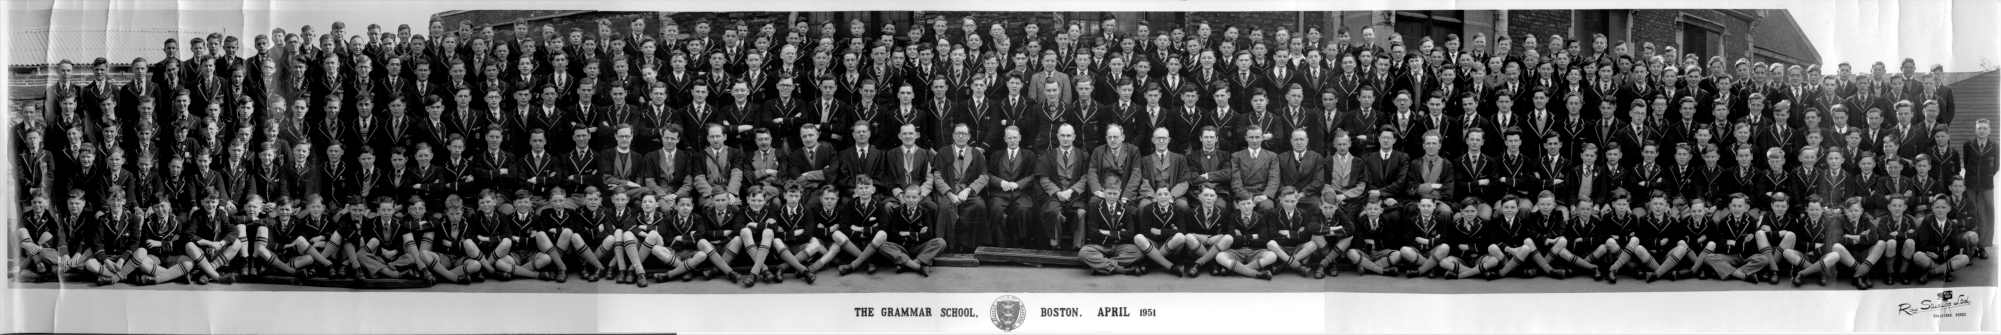 Boston Grammar School - whole school, panoramic photograph (1951)